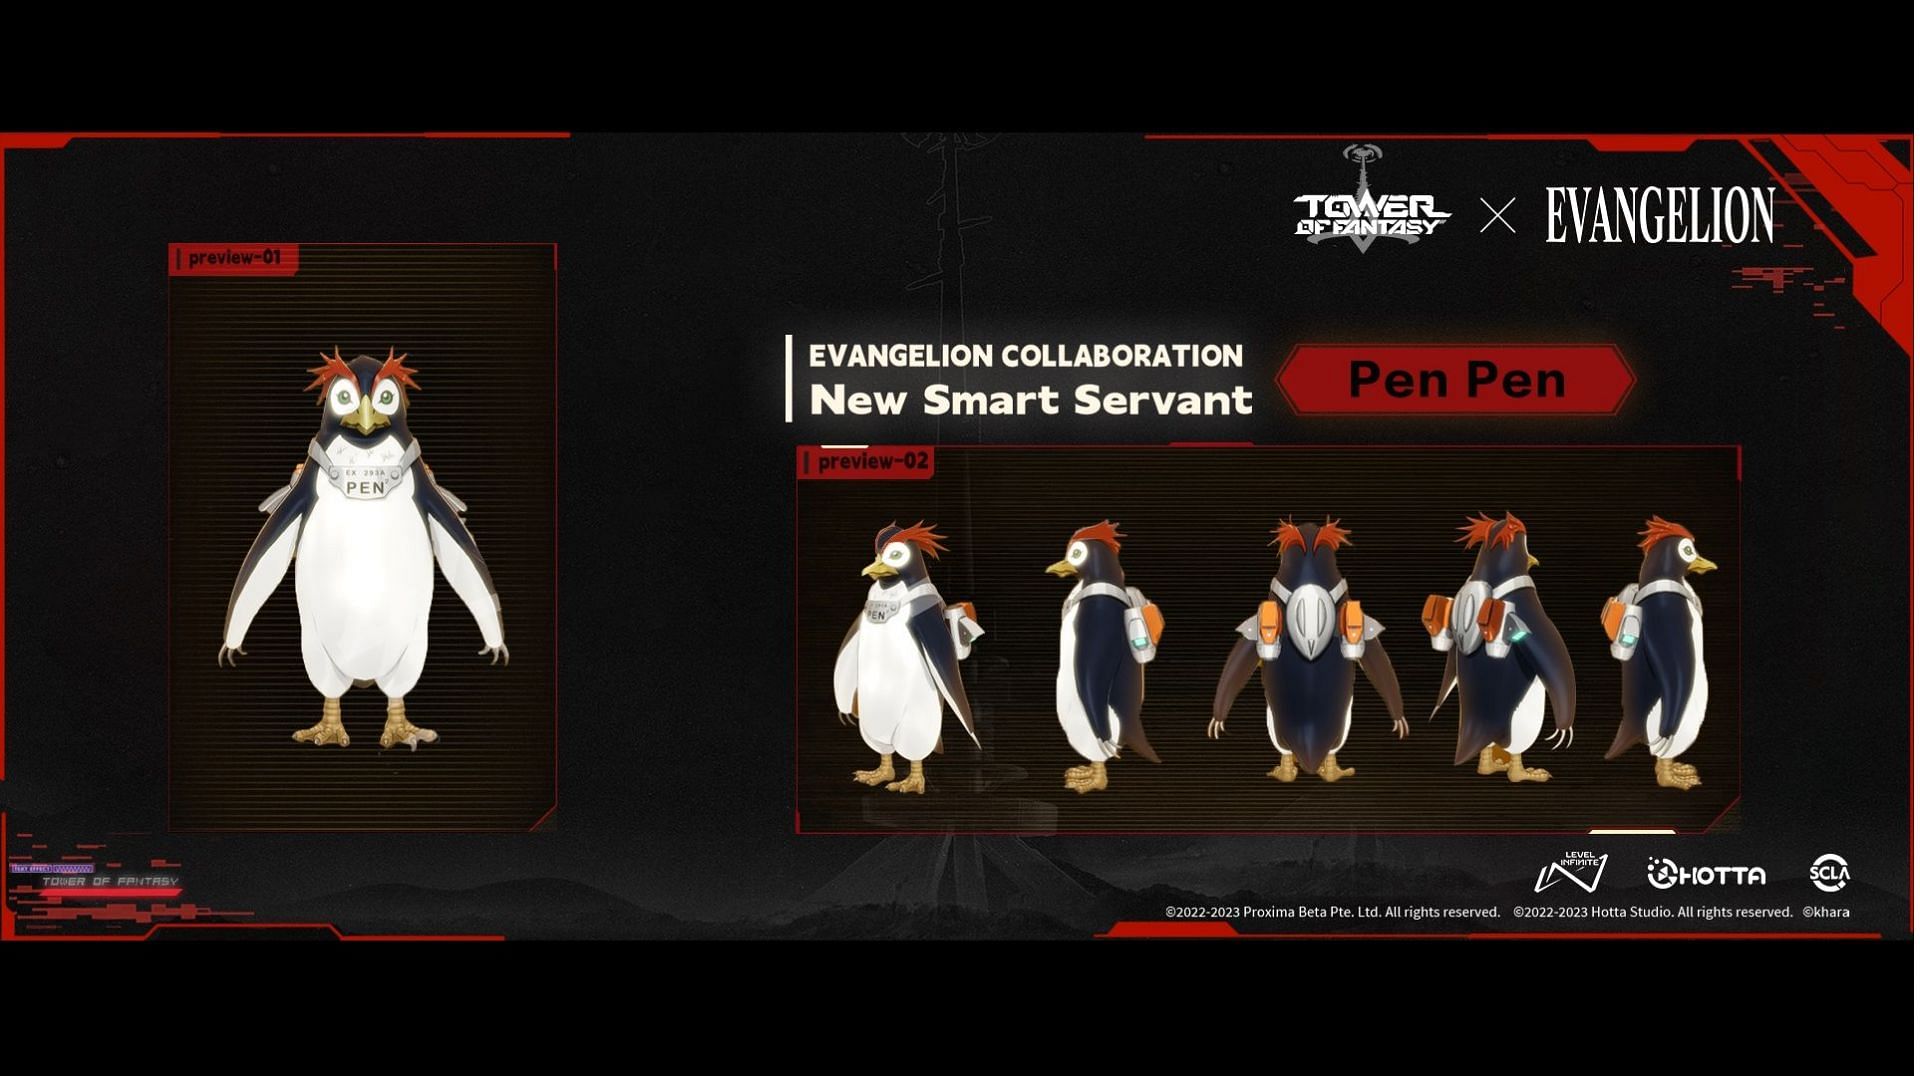 Pen Pen will be the smart servant during the collaboration. (Image via Hotta Studio)